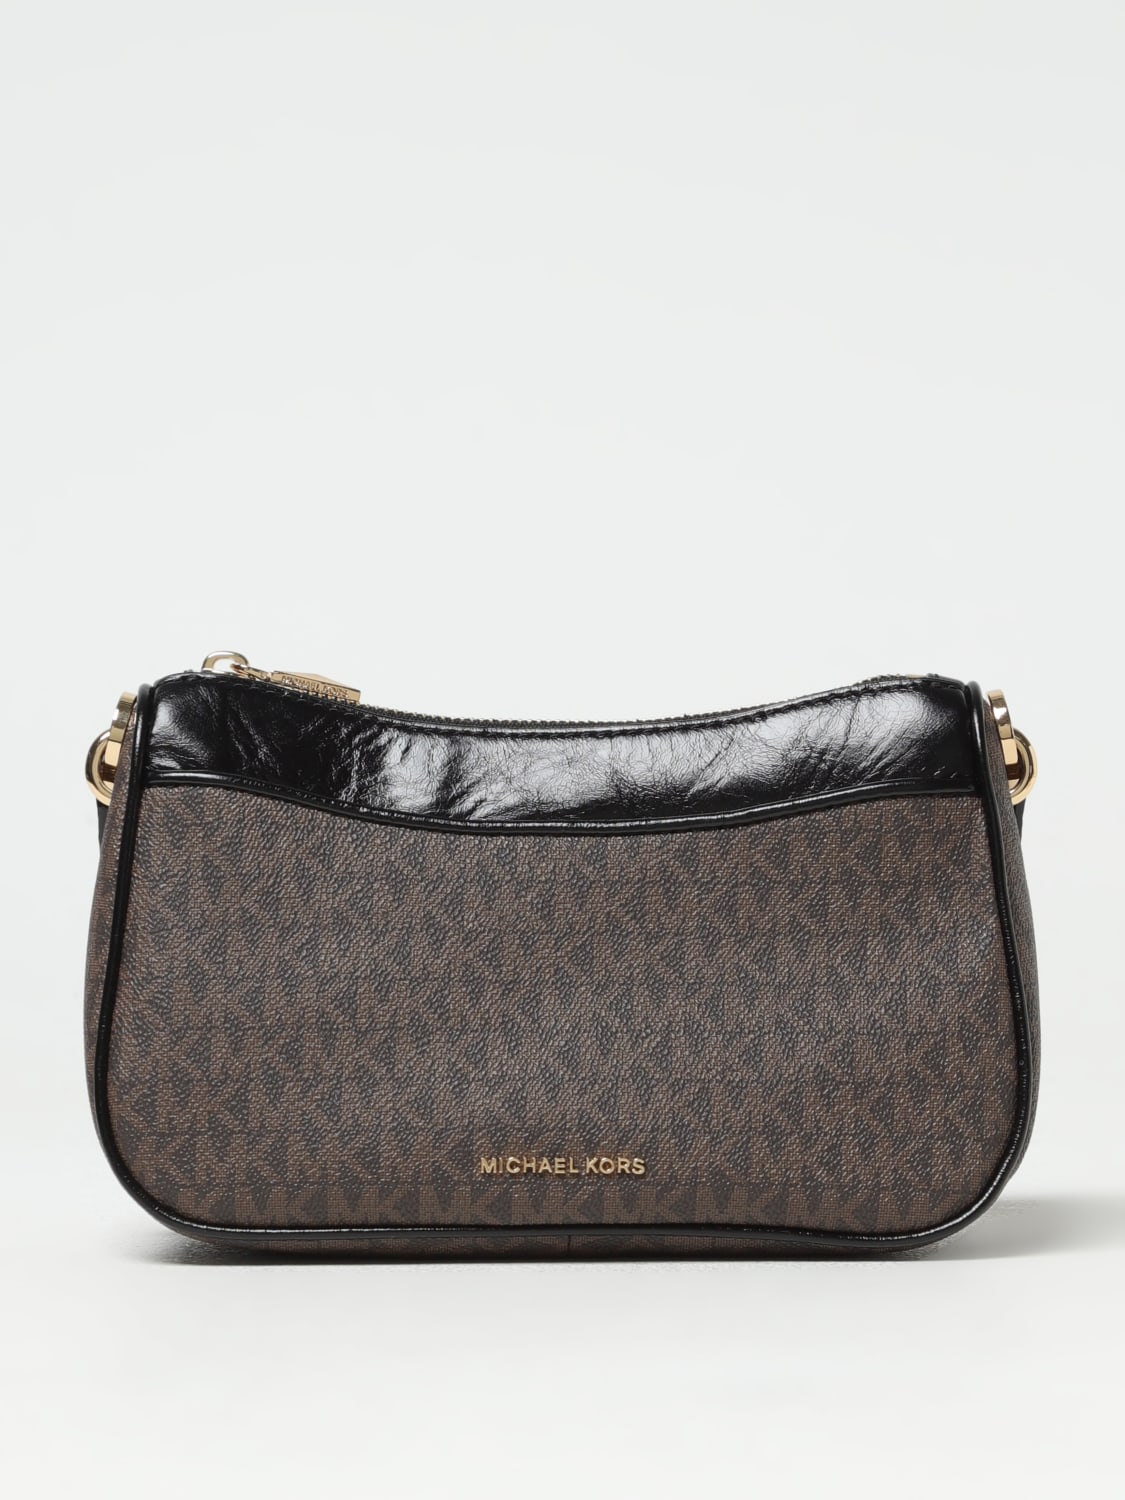 Michael Kors Crossbody Bag for Women, Leather, Brown : Buy Online